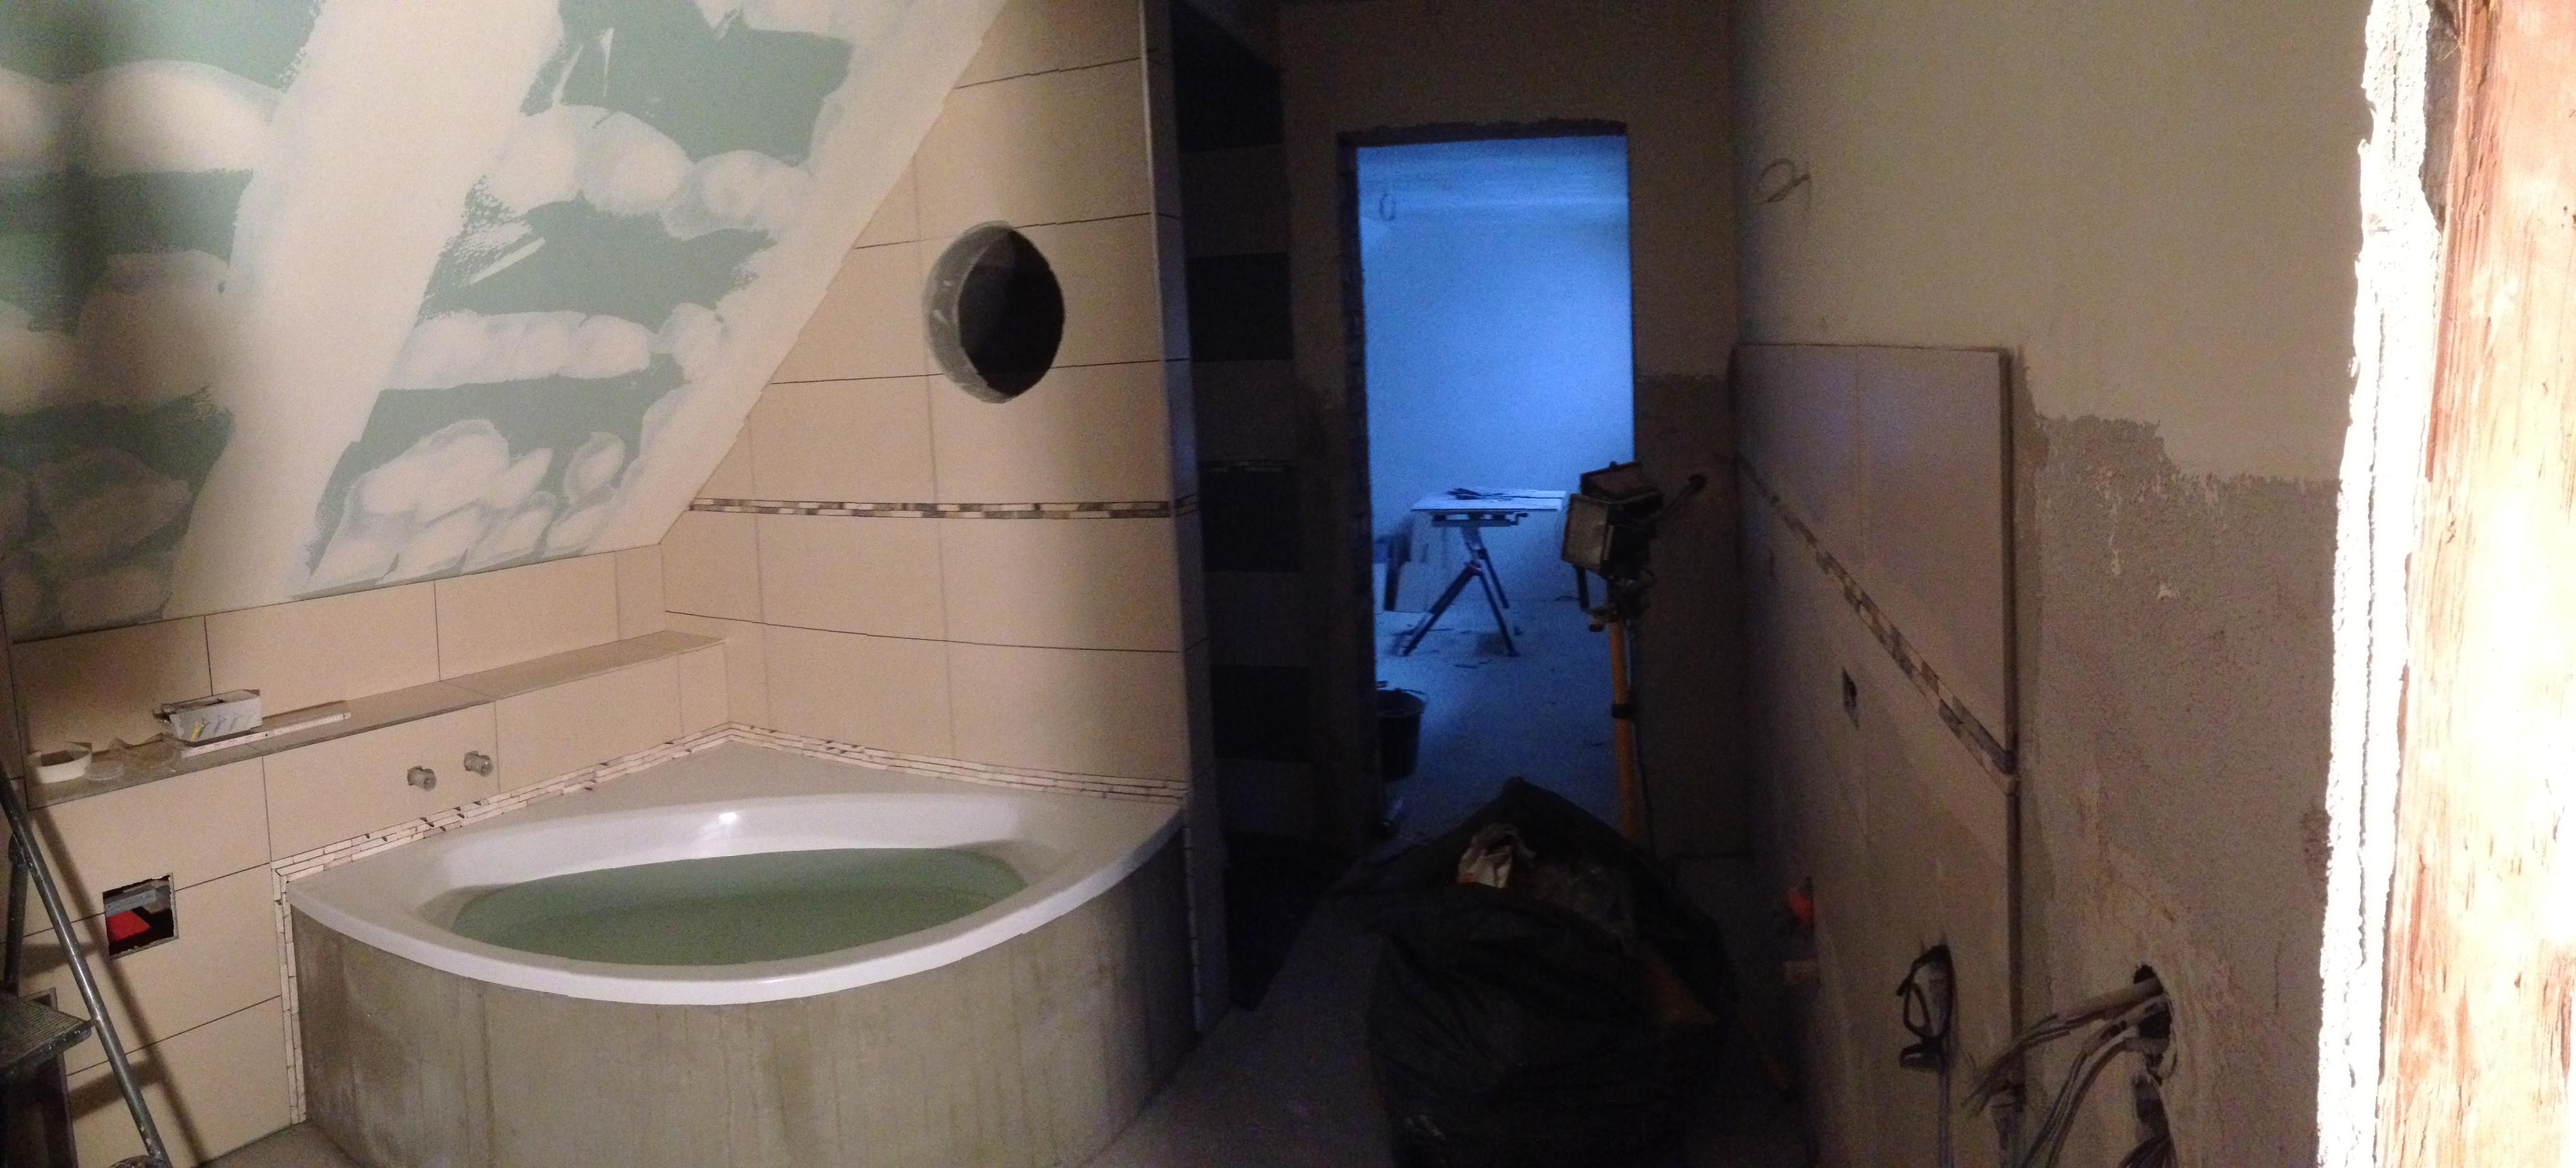 Designer Bad im Galerie Appartement 70m2 Penthouse zu mieten #bad #badezimmer #bullauge #badezimmerdachschräge #maritim ©Tatjana Adelt